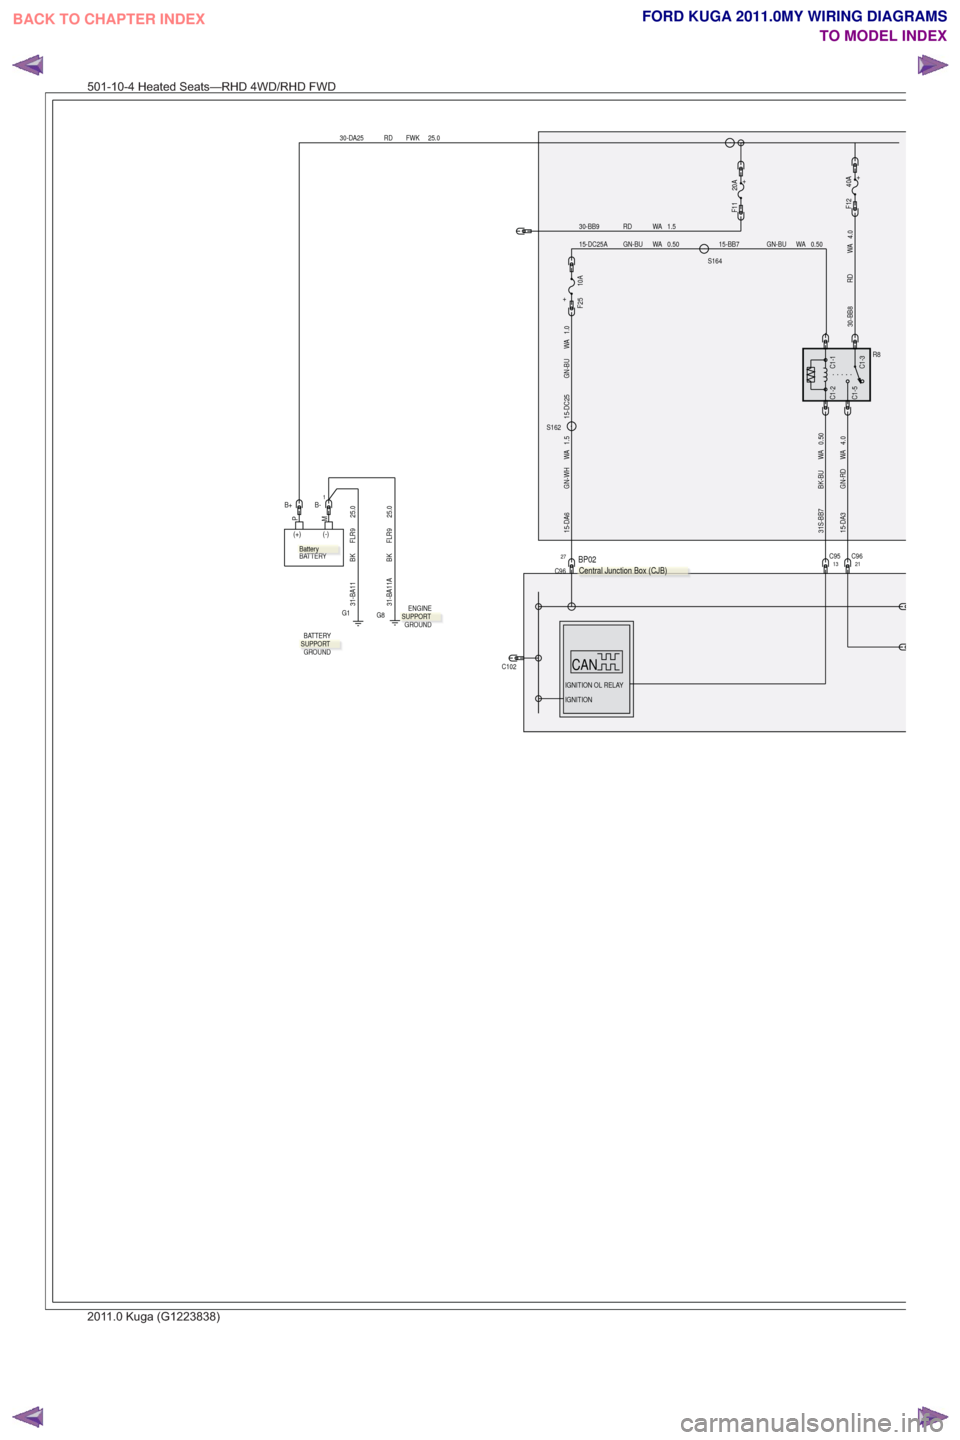 FORD KUGA 2011 1.G Wiring Diagram Workshop Manual 30-DA25 RD FWK 25.0
PM
(+) (-)
BATTERY
B+
C102
30-BB9 RD WA 1.5
+20A
F11+
F12 40A
C1-5
C1-1C1-3
C1-2
R8
30-BB8 RD WA 4.0
S162
31S-BB7 BK-BU WA 0.50
4.0
WA
GN-RD
15-DA3
13C95C9621
1.5
WA
GN-WH
15-DA6
C